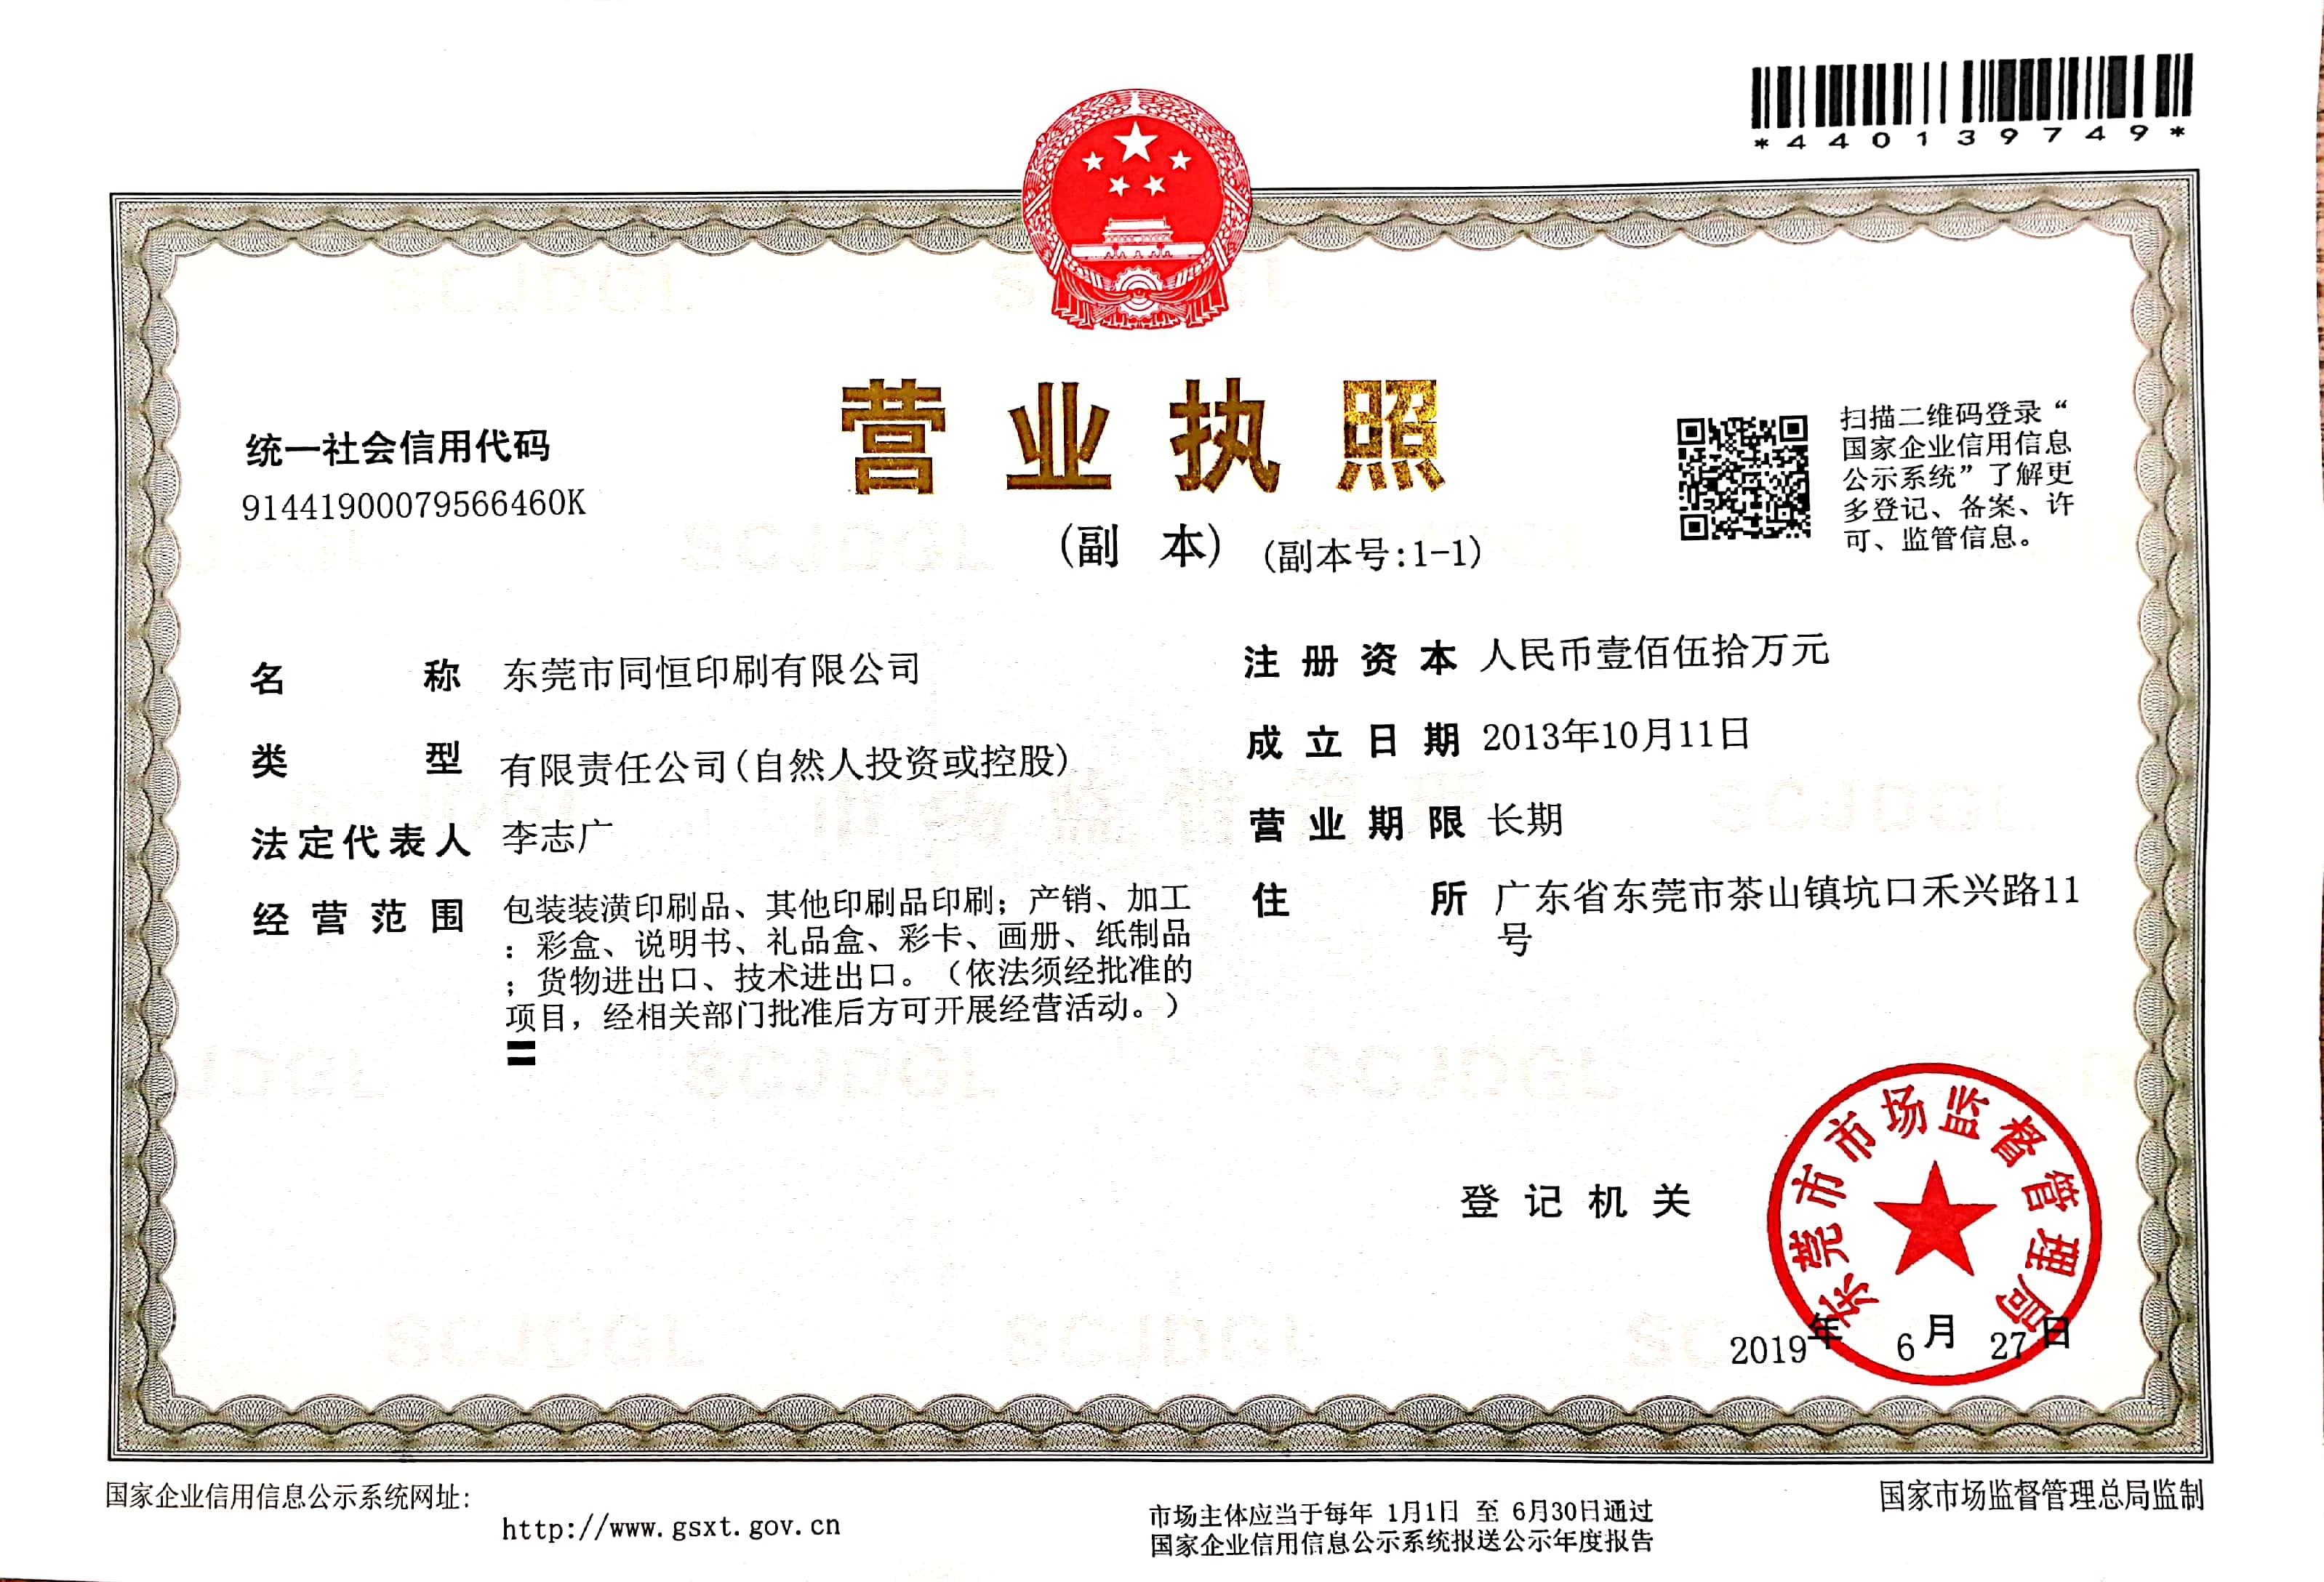 Company Overview - Dongguan Tongheng Printing Co., Ltd.